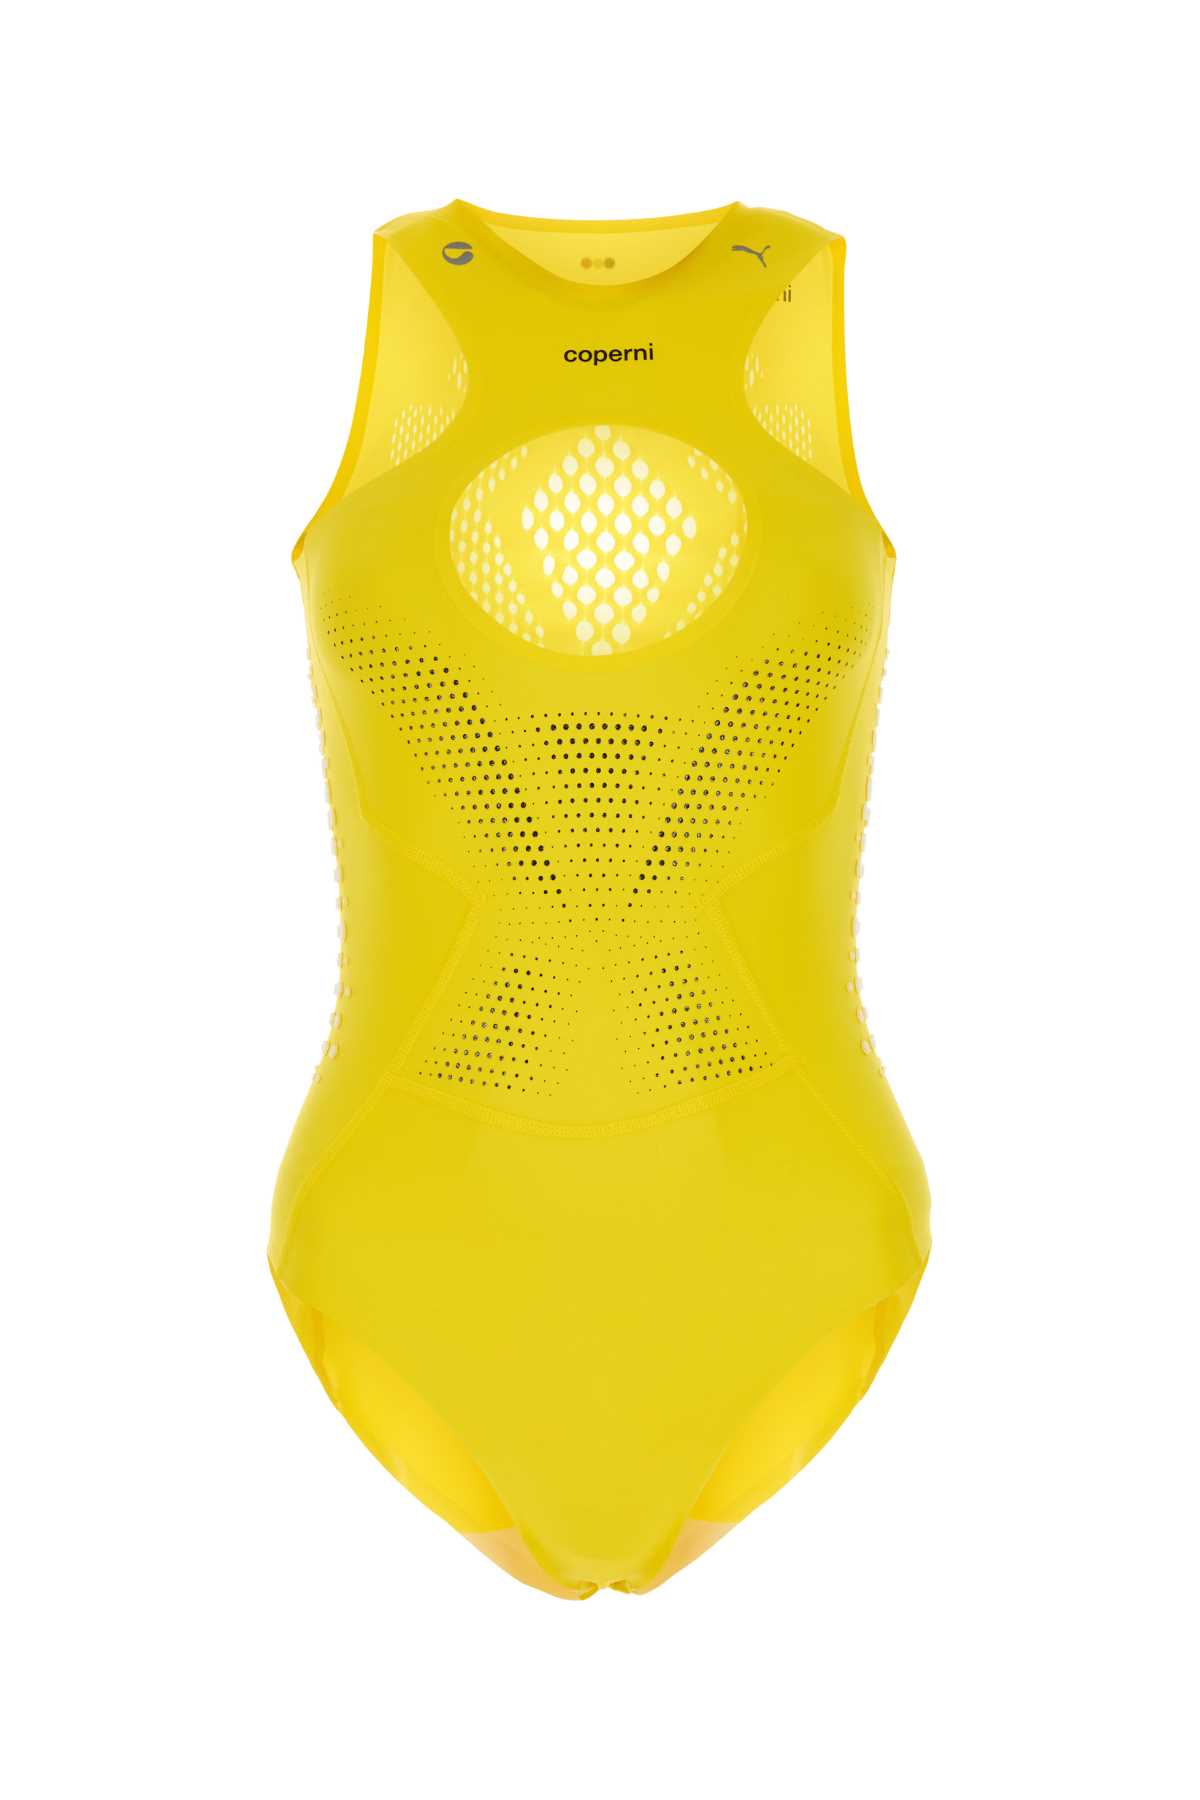 Coperni Yellow Stretch Nylon  X Puma Bodysuit